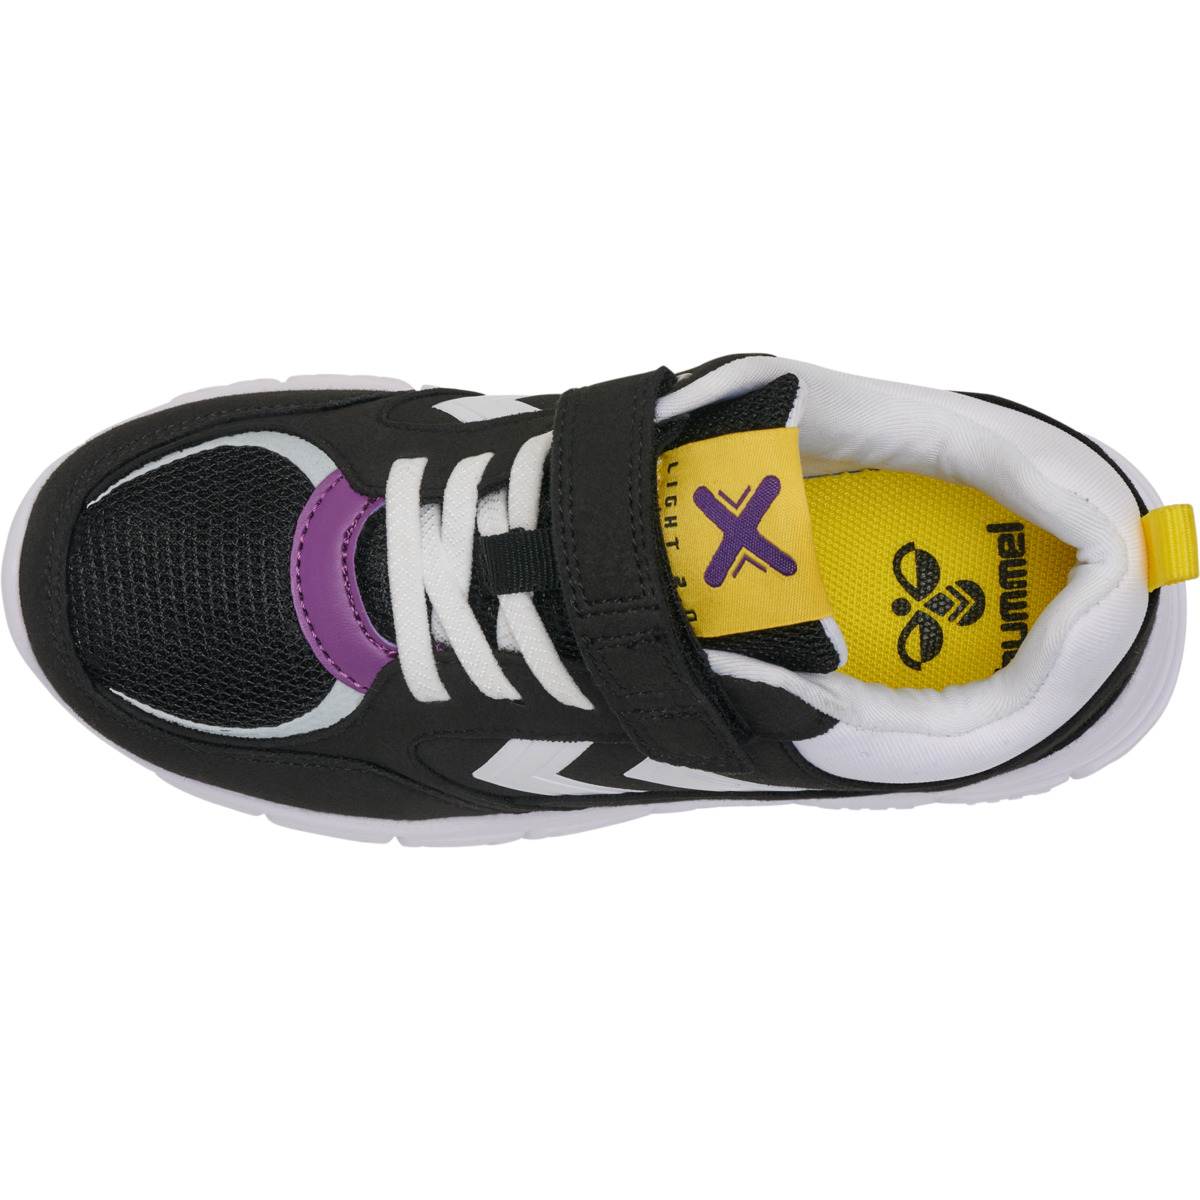  X-Light 2.0 Jr. Sneakers, Sort, 33